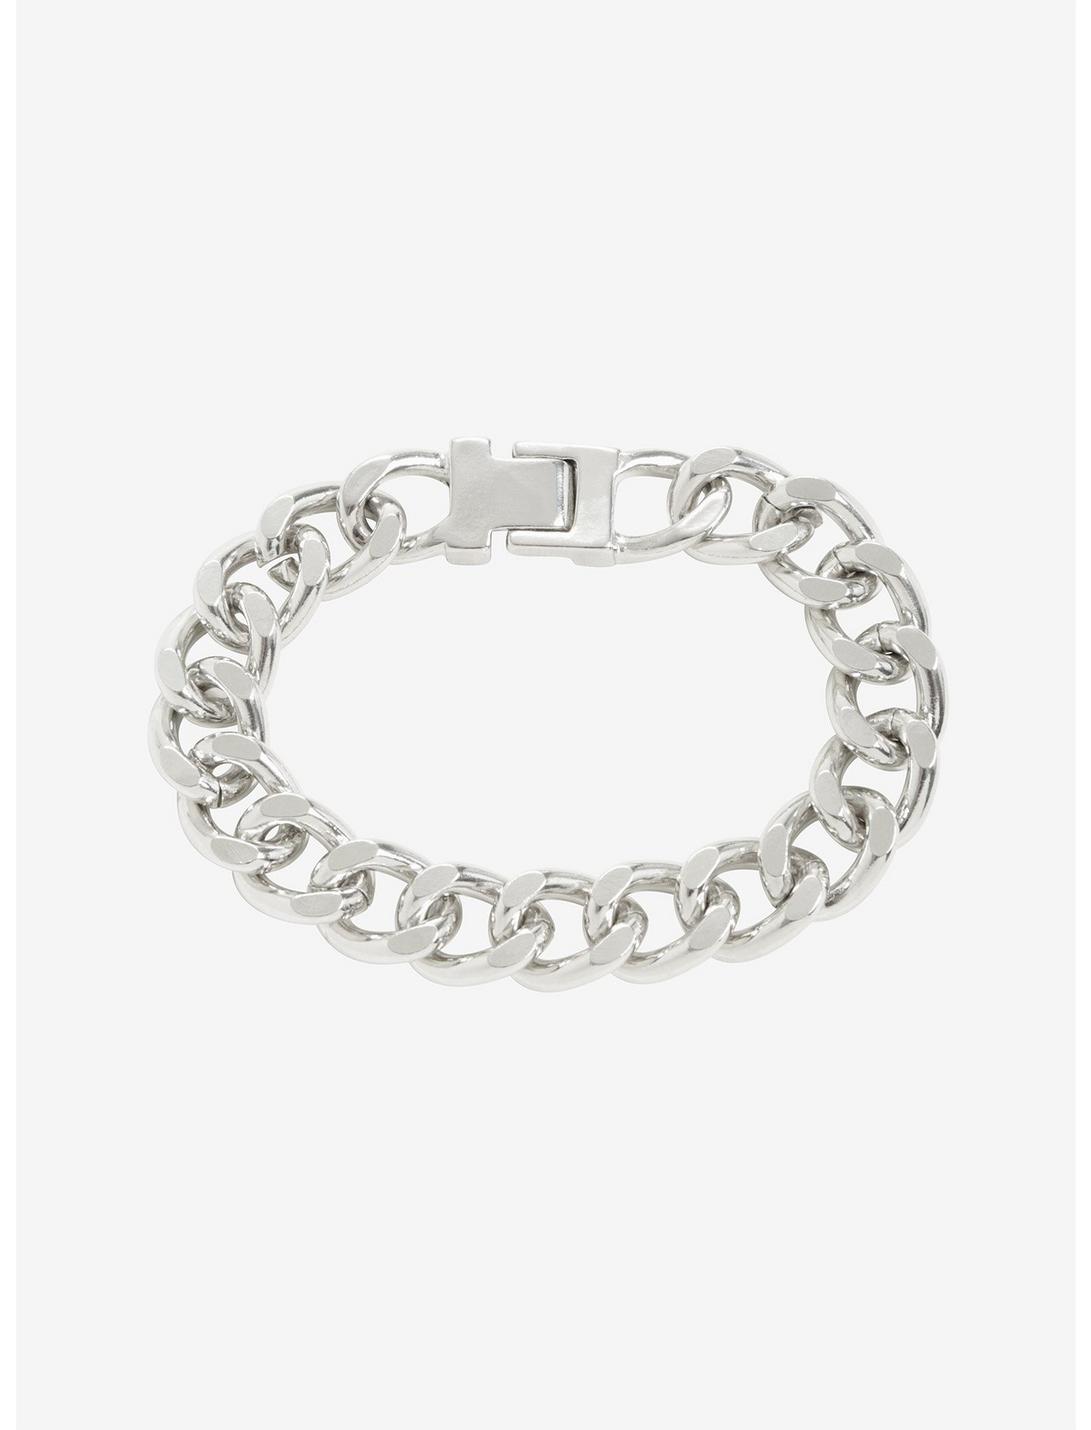 Silver Chain Link Guys Bracelet, , hi-res